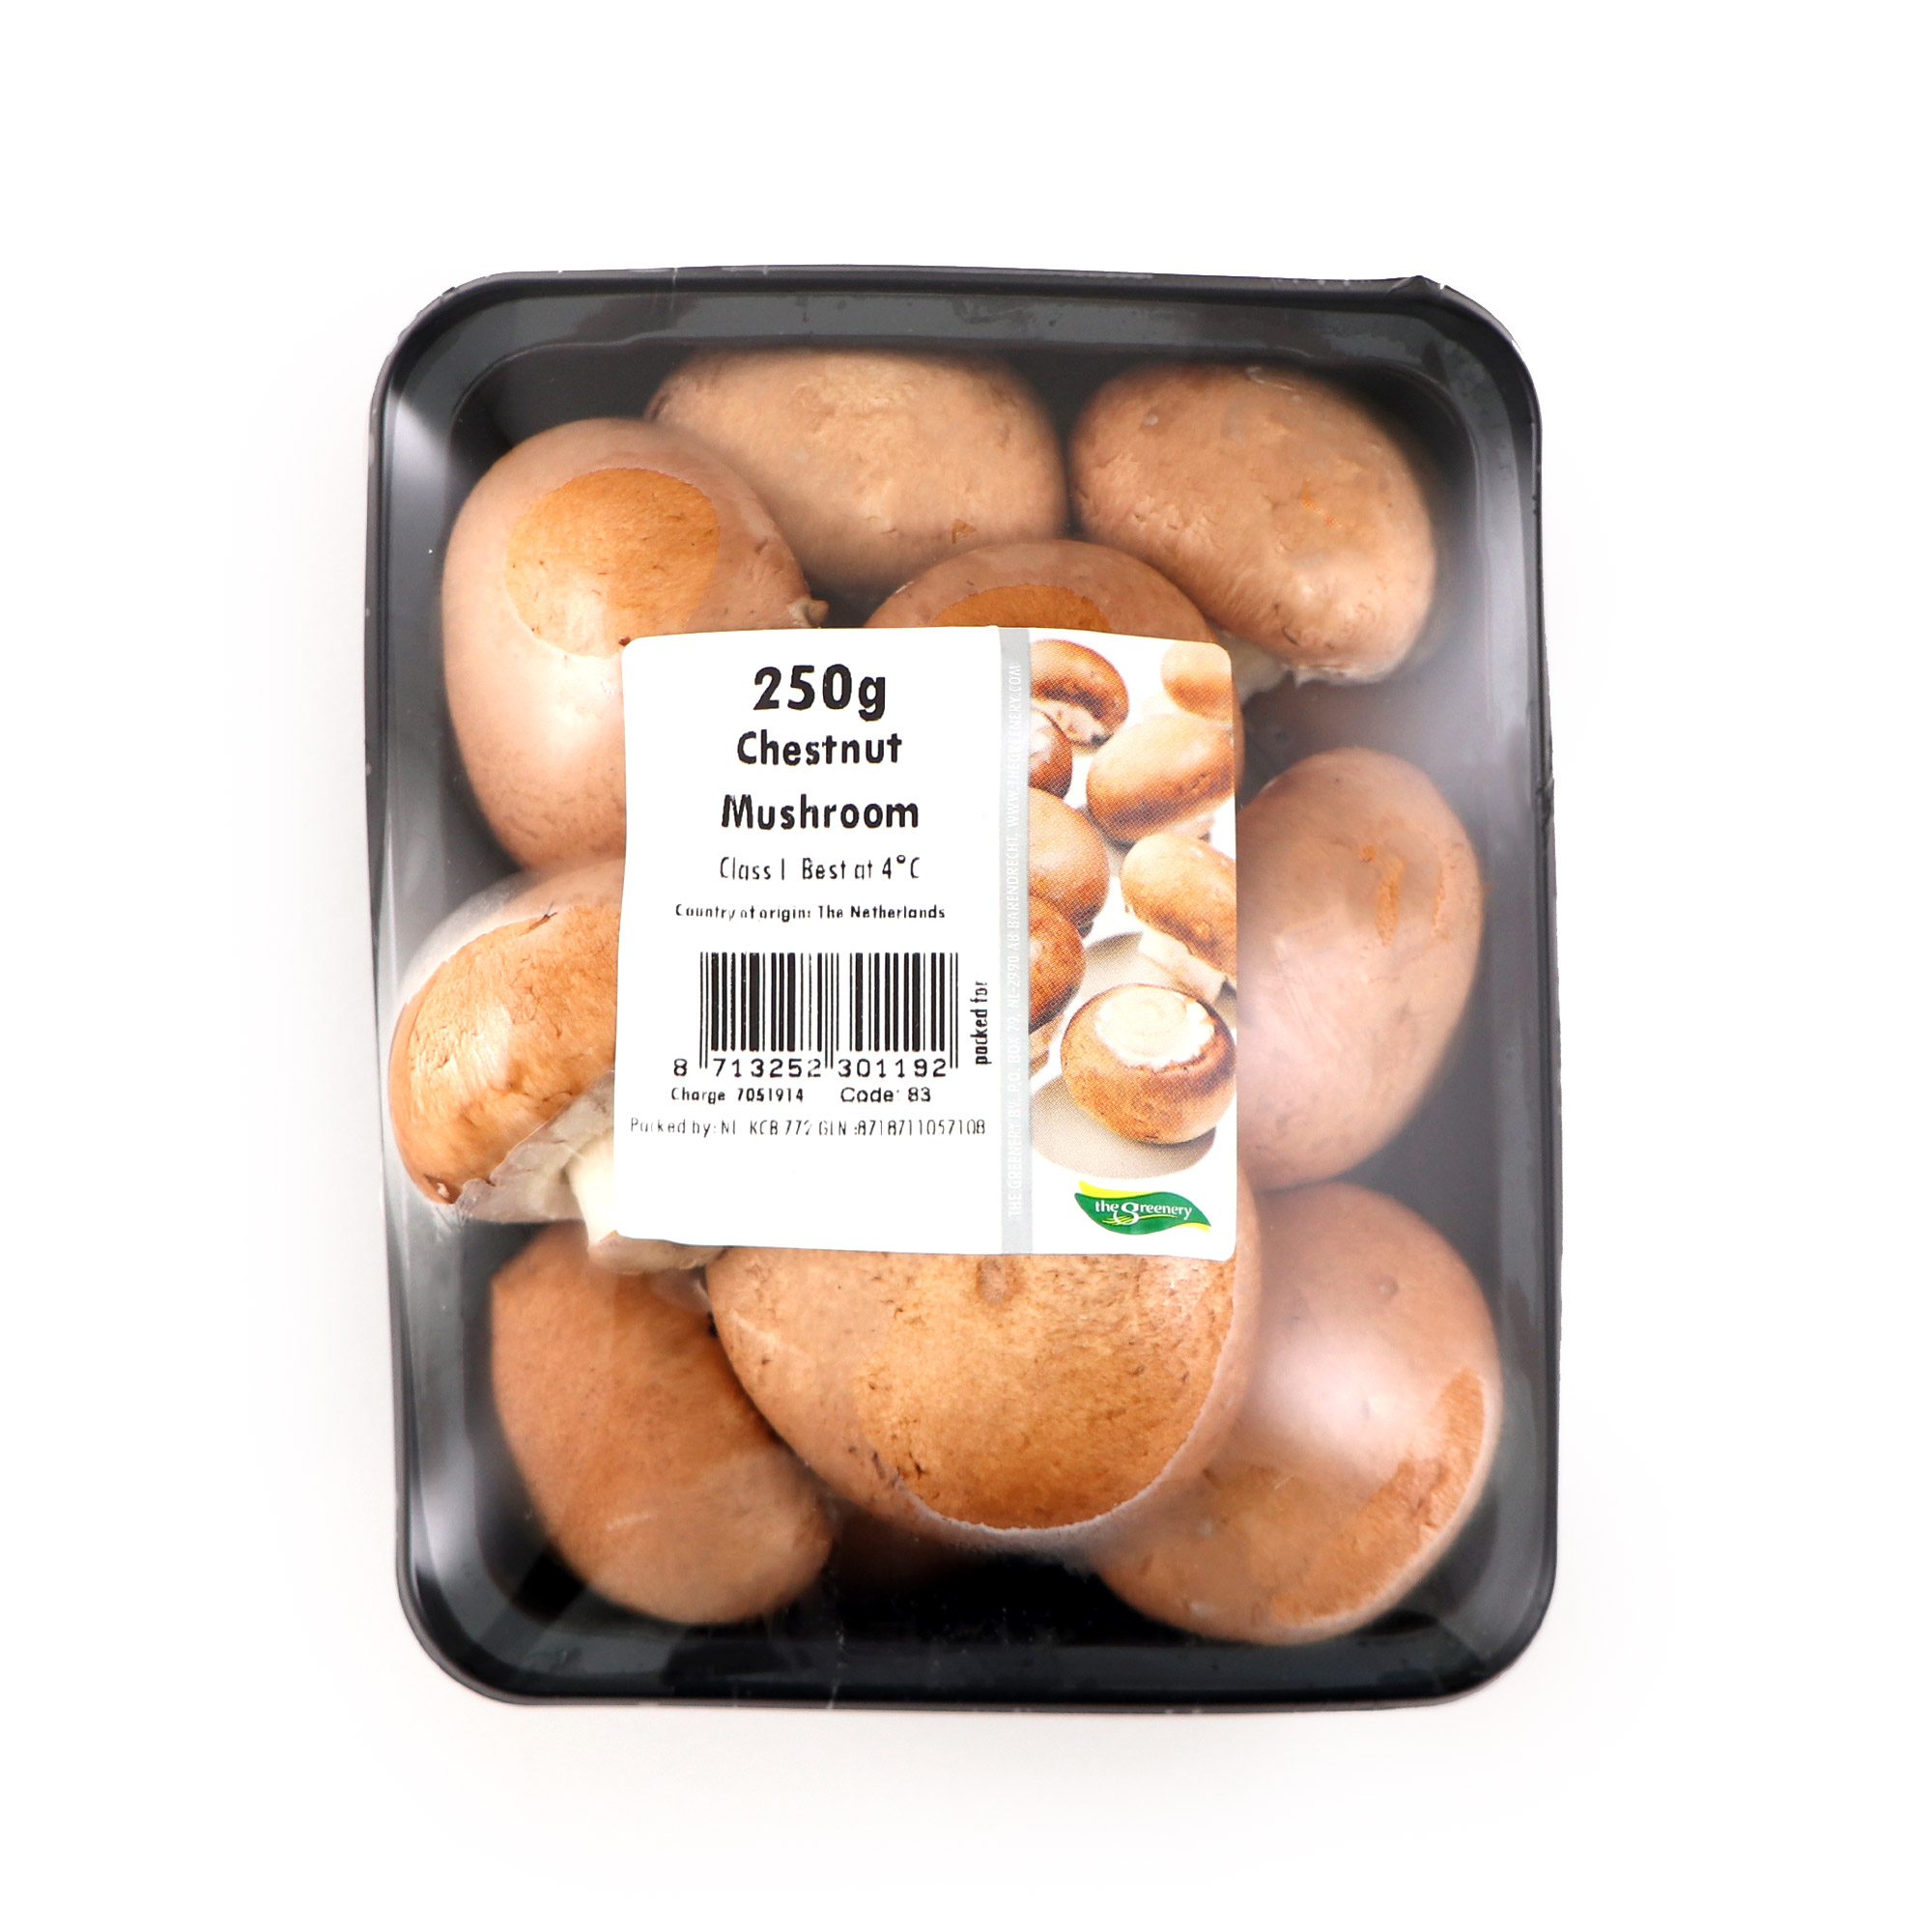 Brown Mushroom 250g - Netherlands*